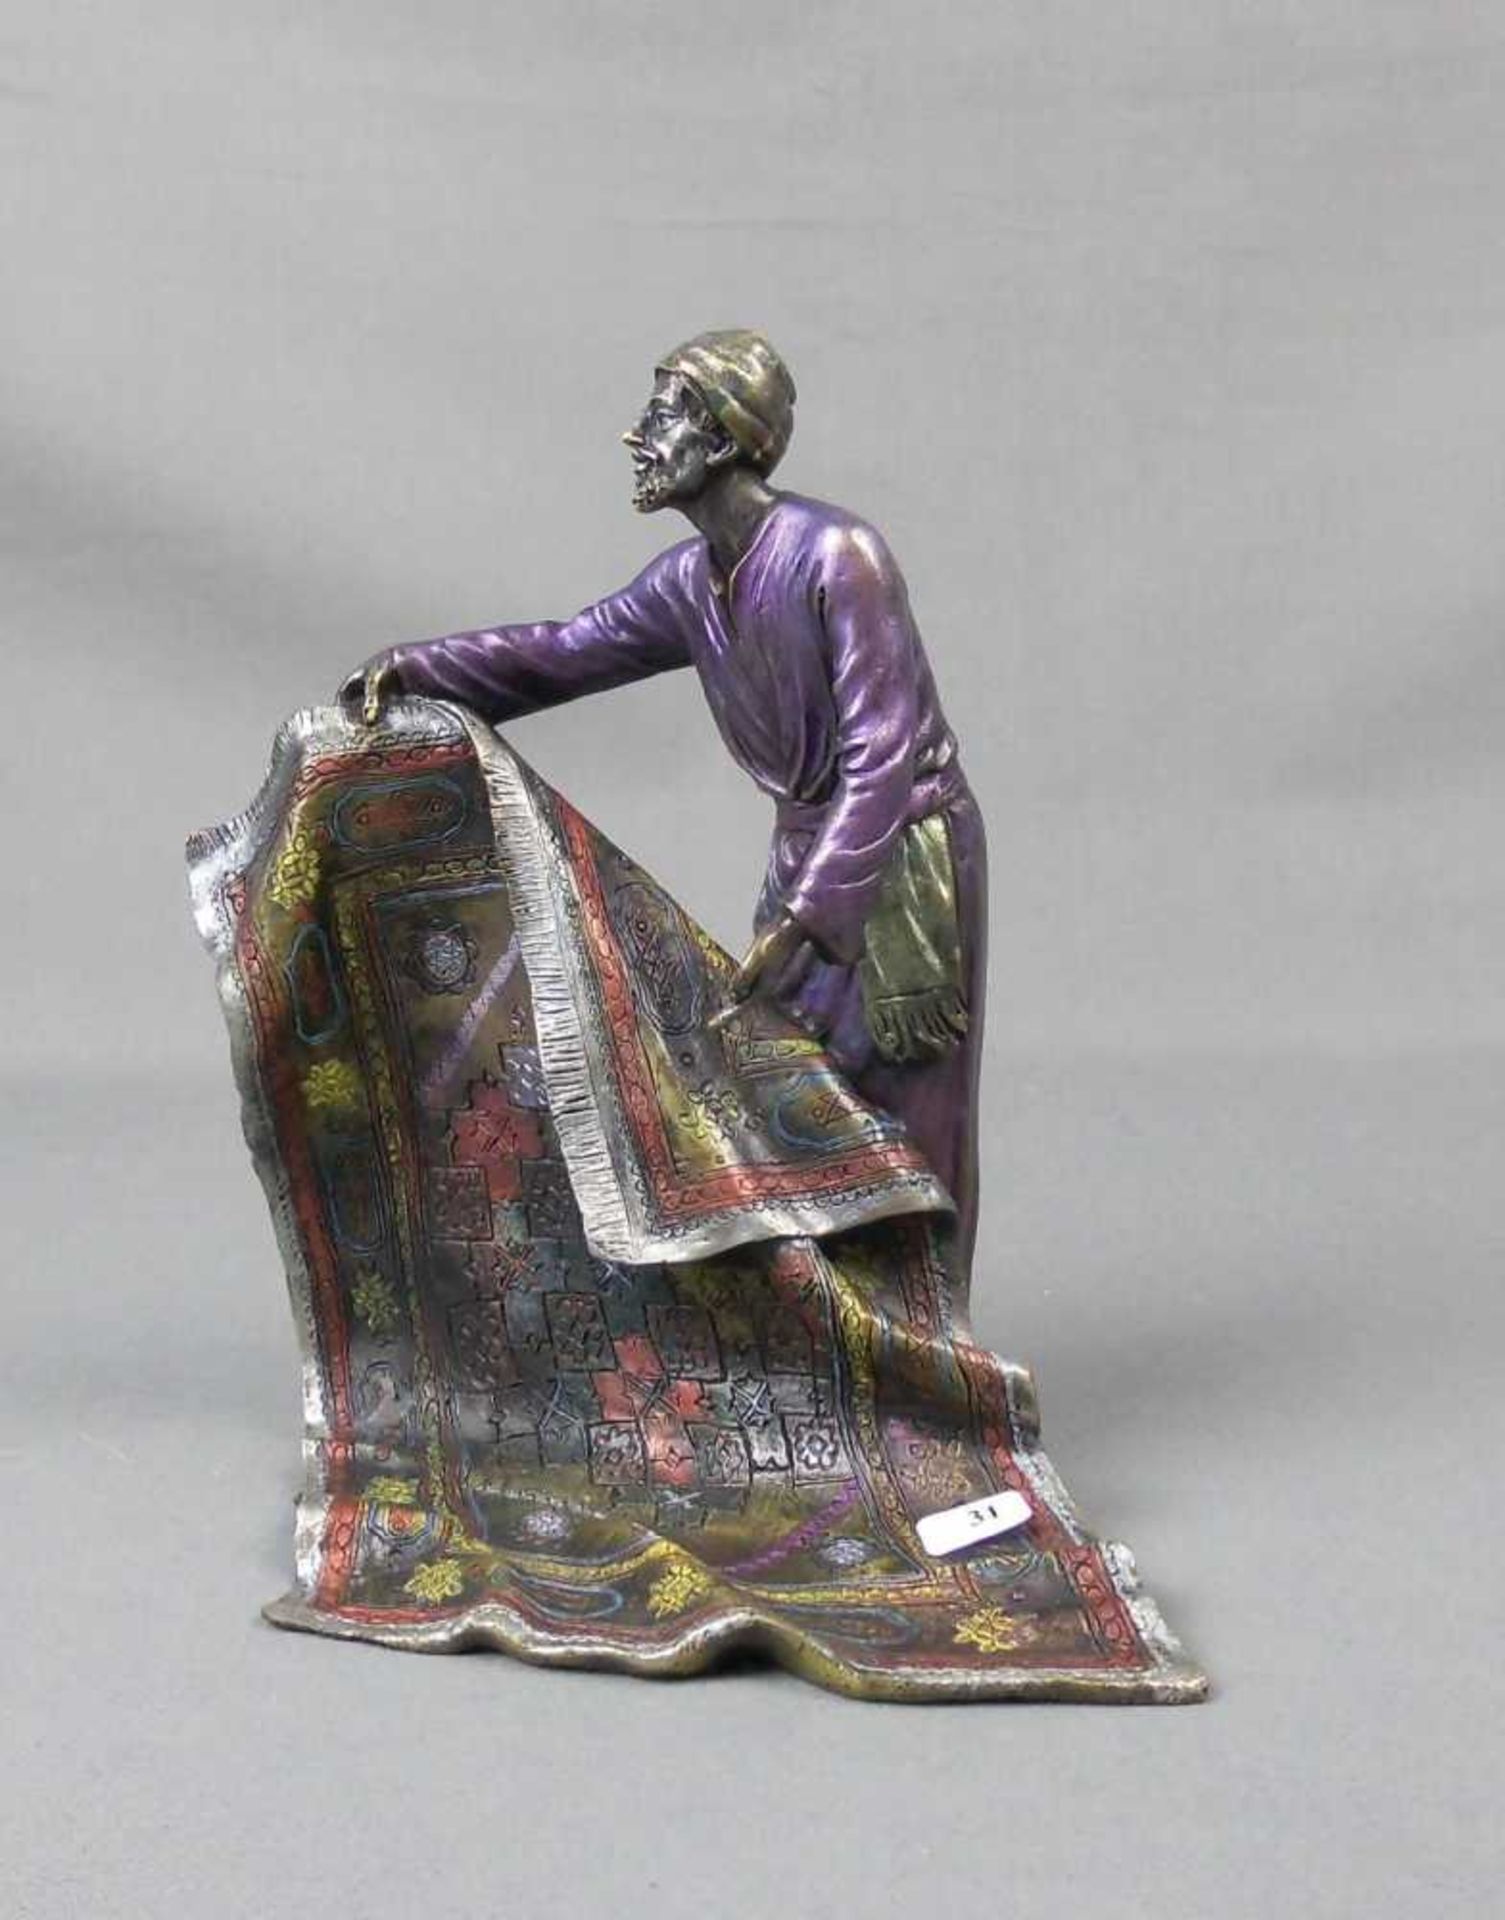 BERGMAN, FRANZ (1898-1963), Skulptur / sculpture: "Arabischer Teppichhändler", revers vertieft